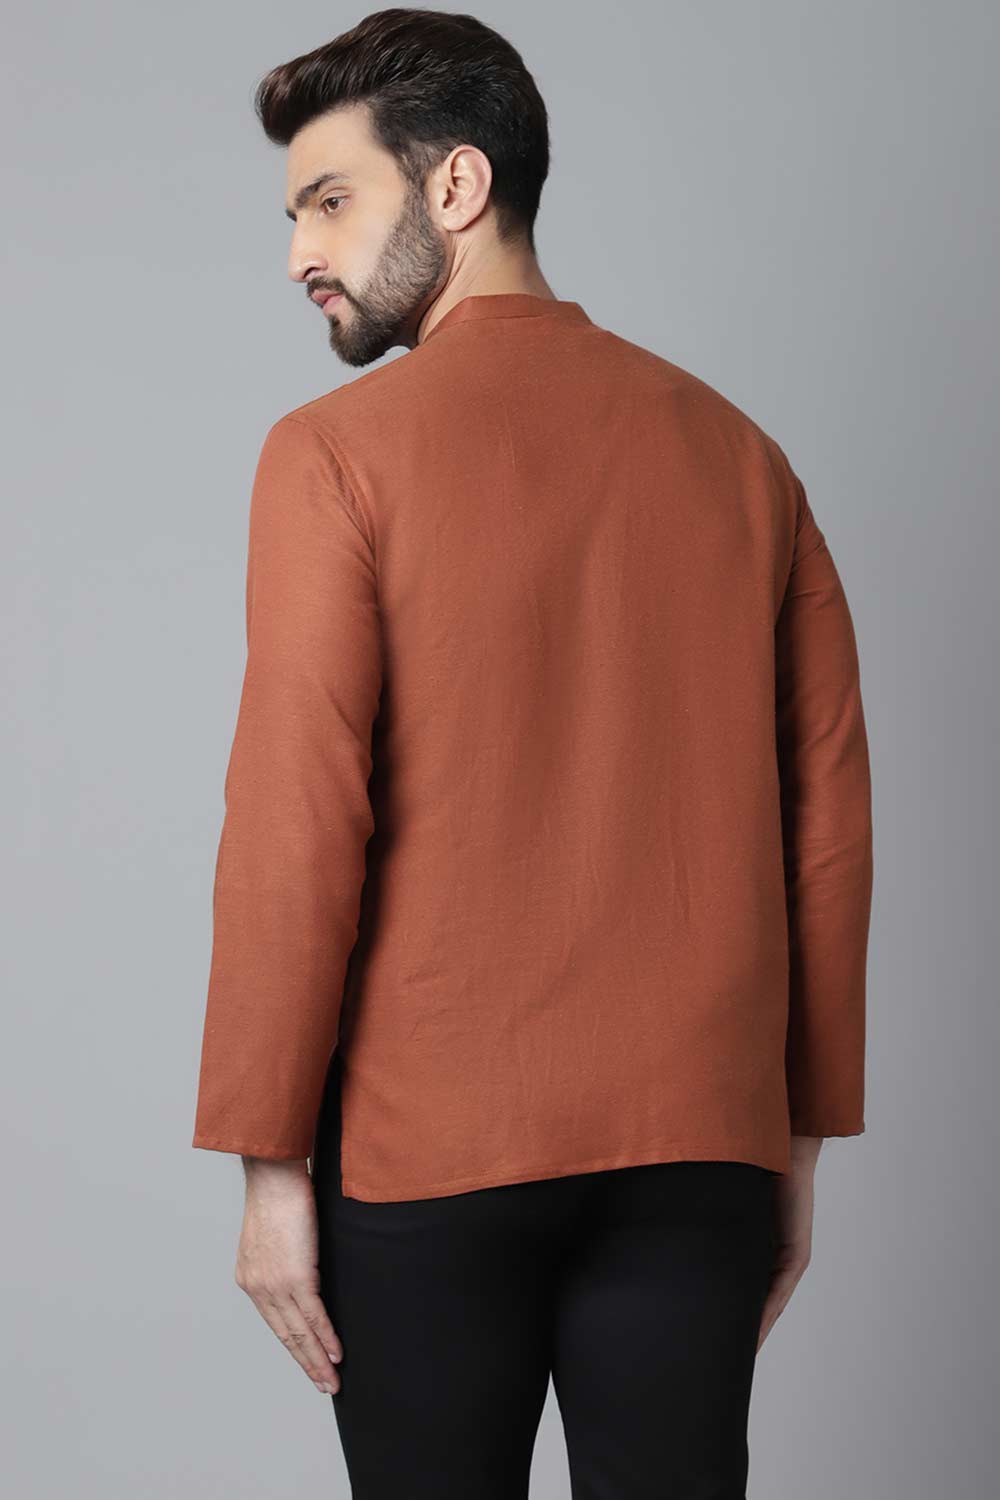 Buy Men's Rust Cotton Solid Long Kurta Online - KARMAPLACE